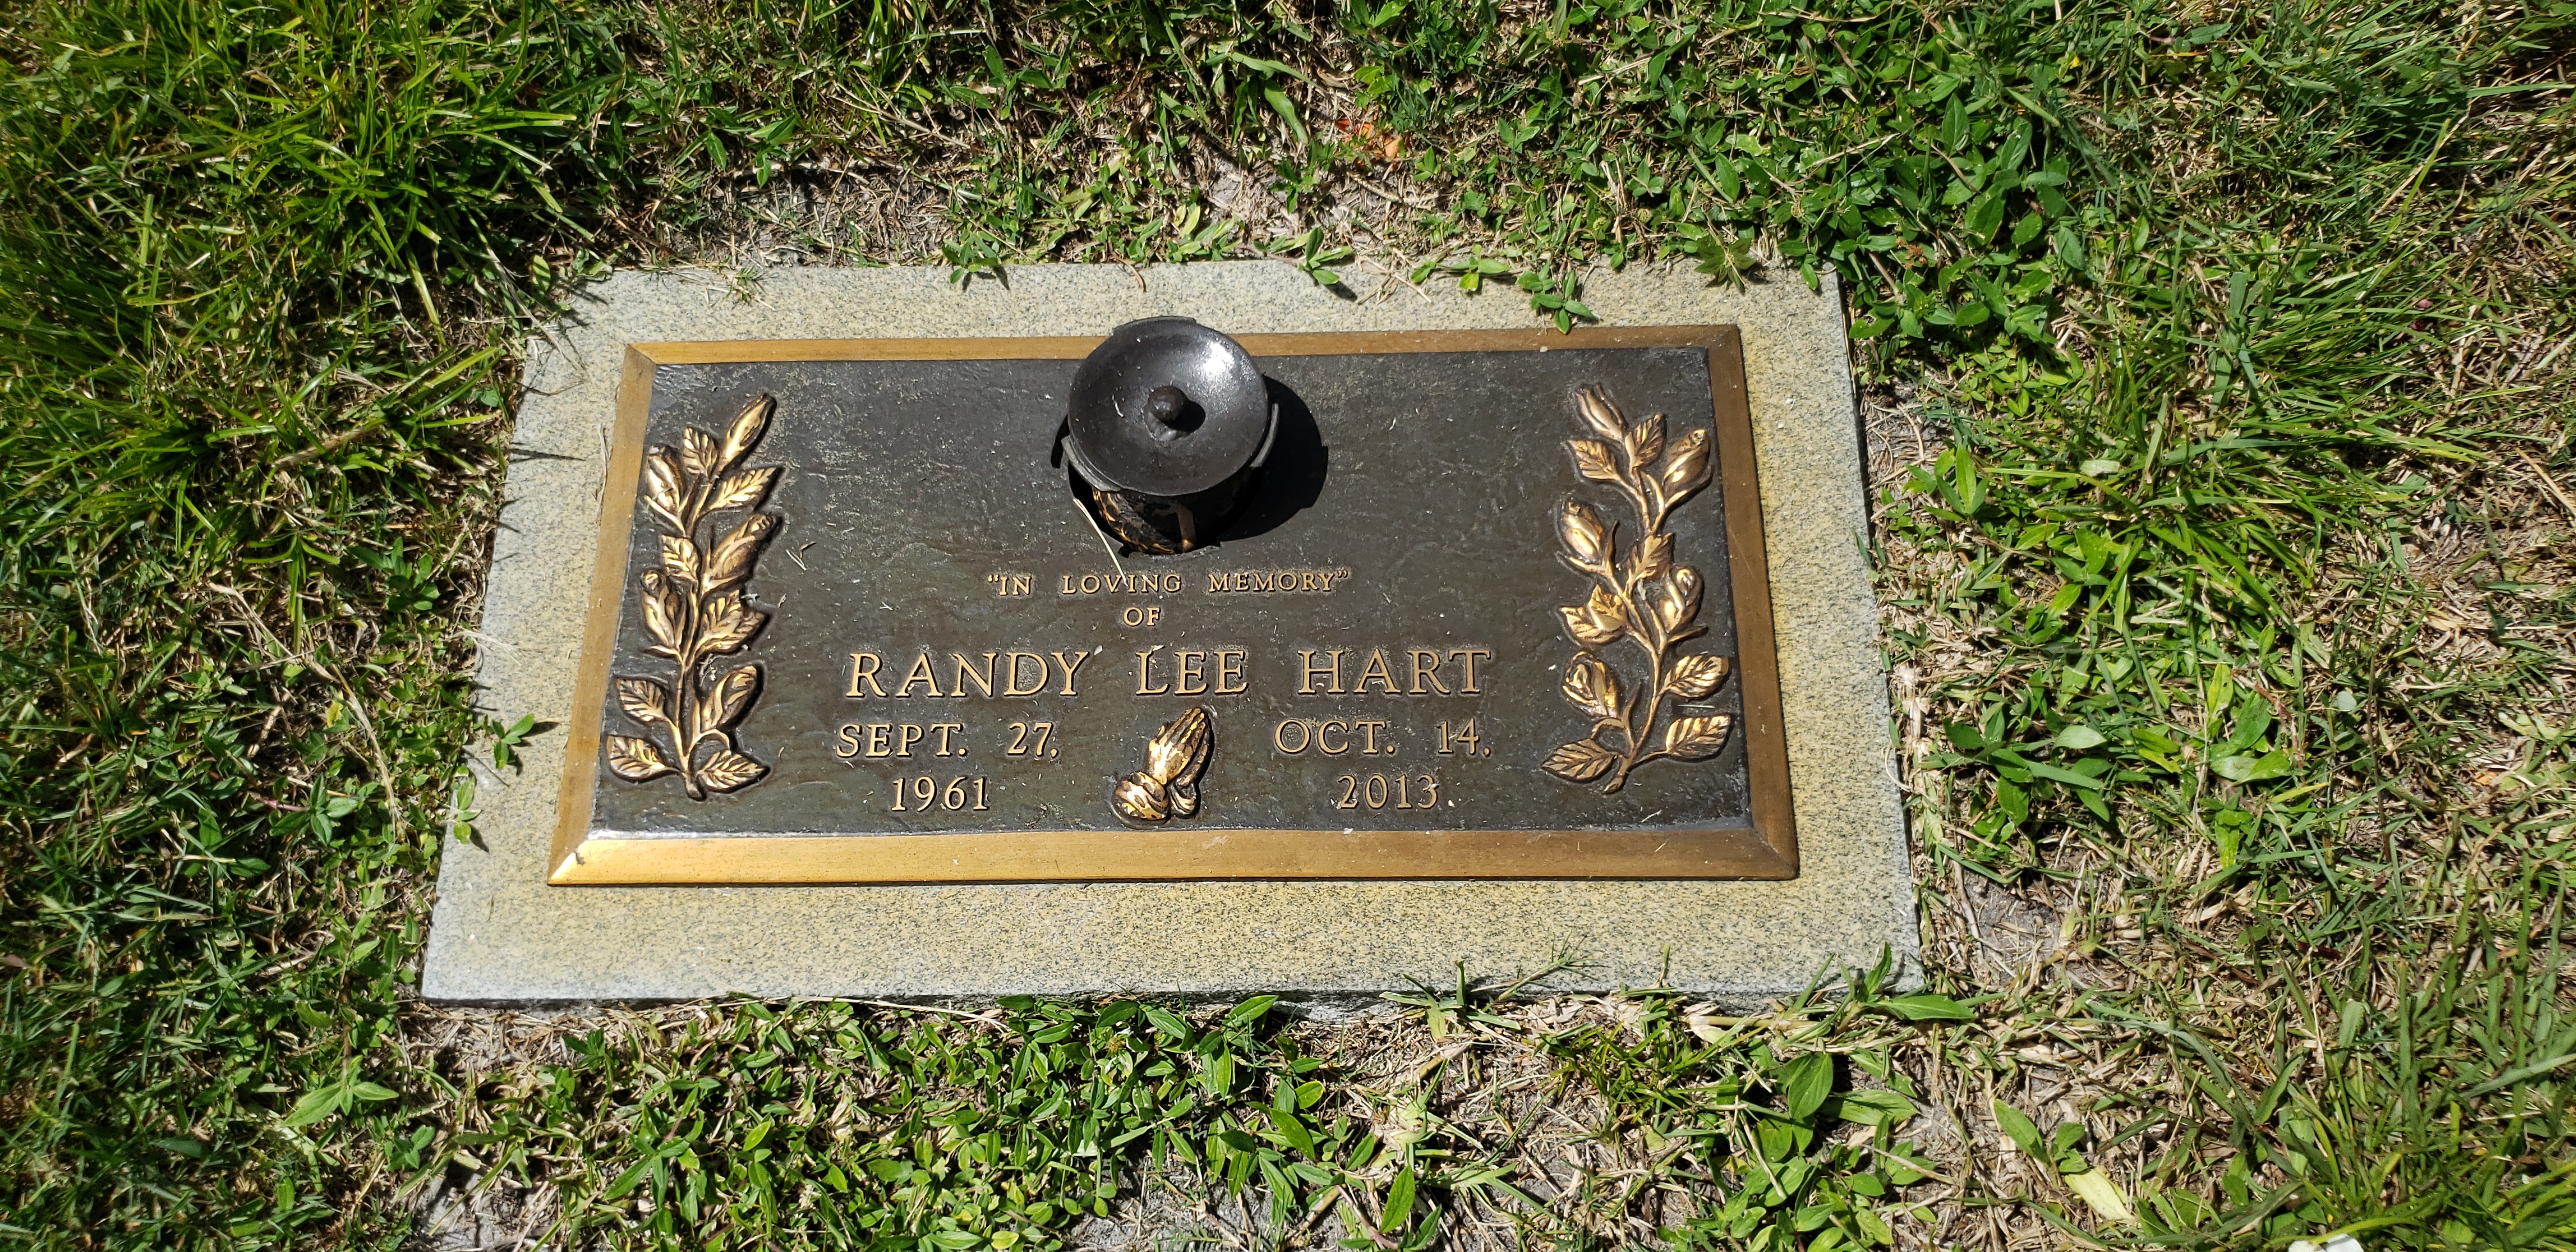 Randy Lee Hart